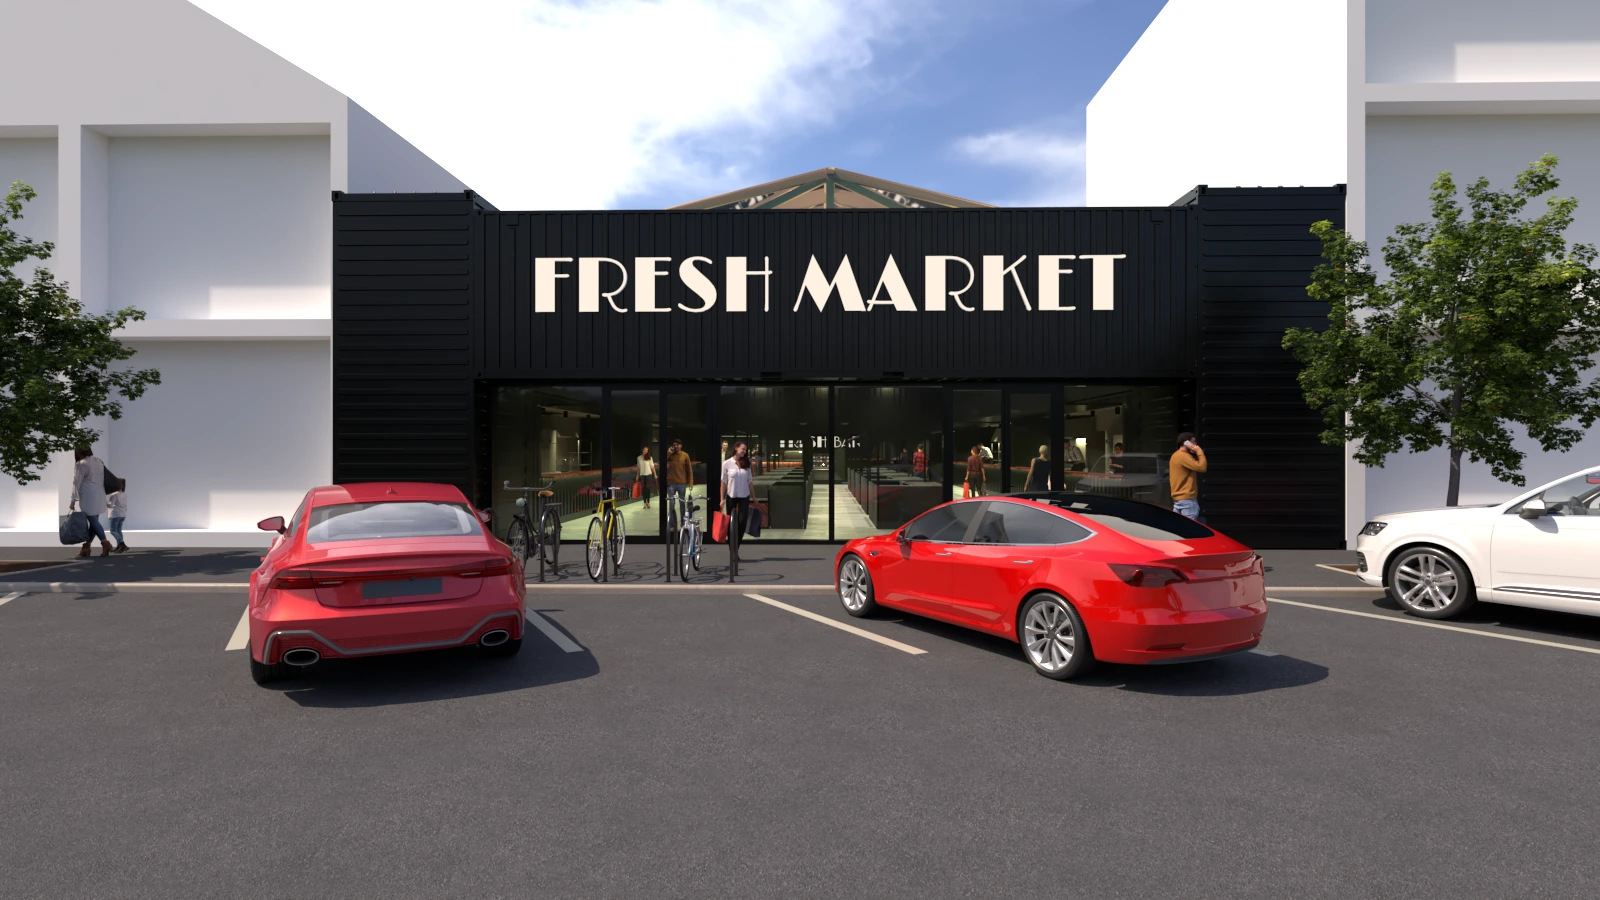 Fresh_market_exterior_2 (1)